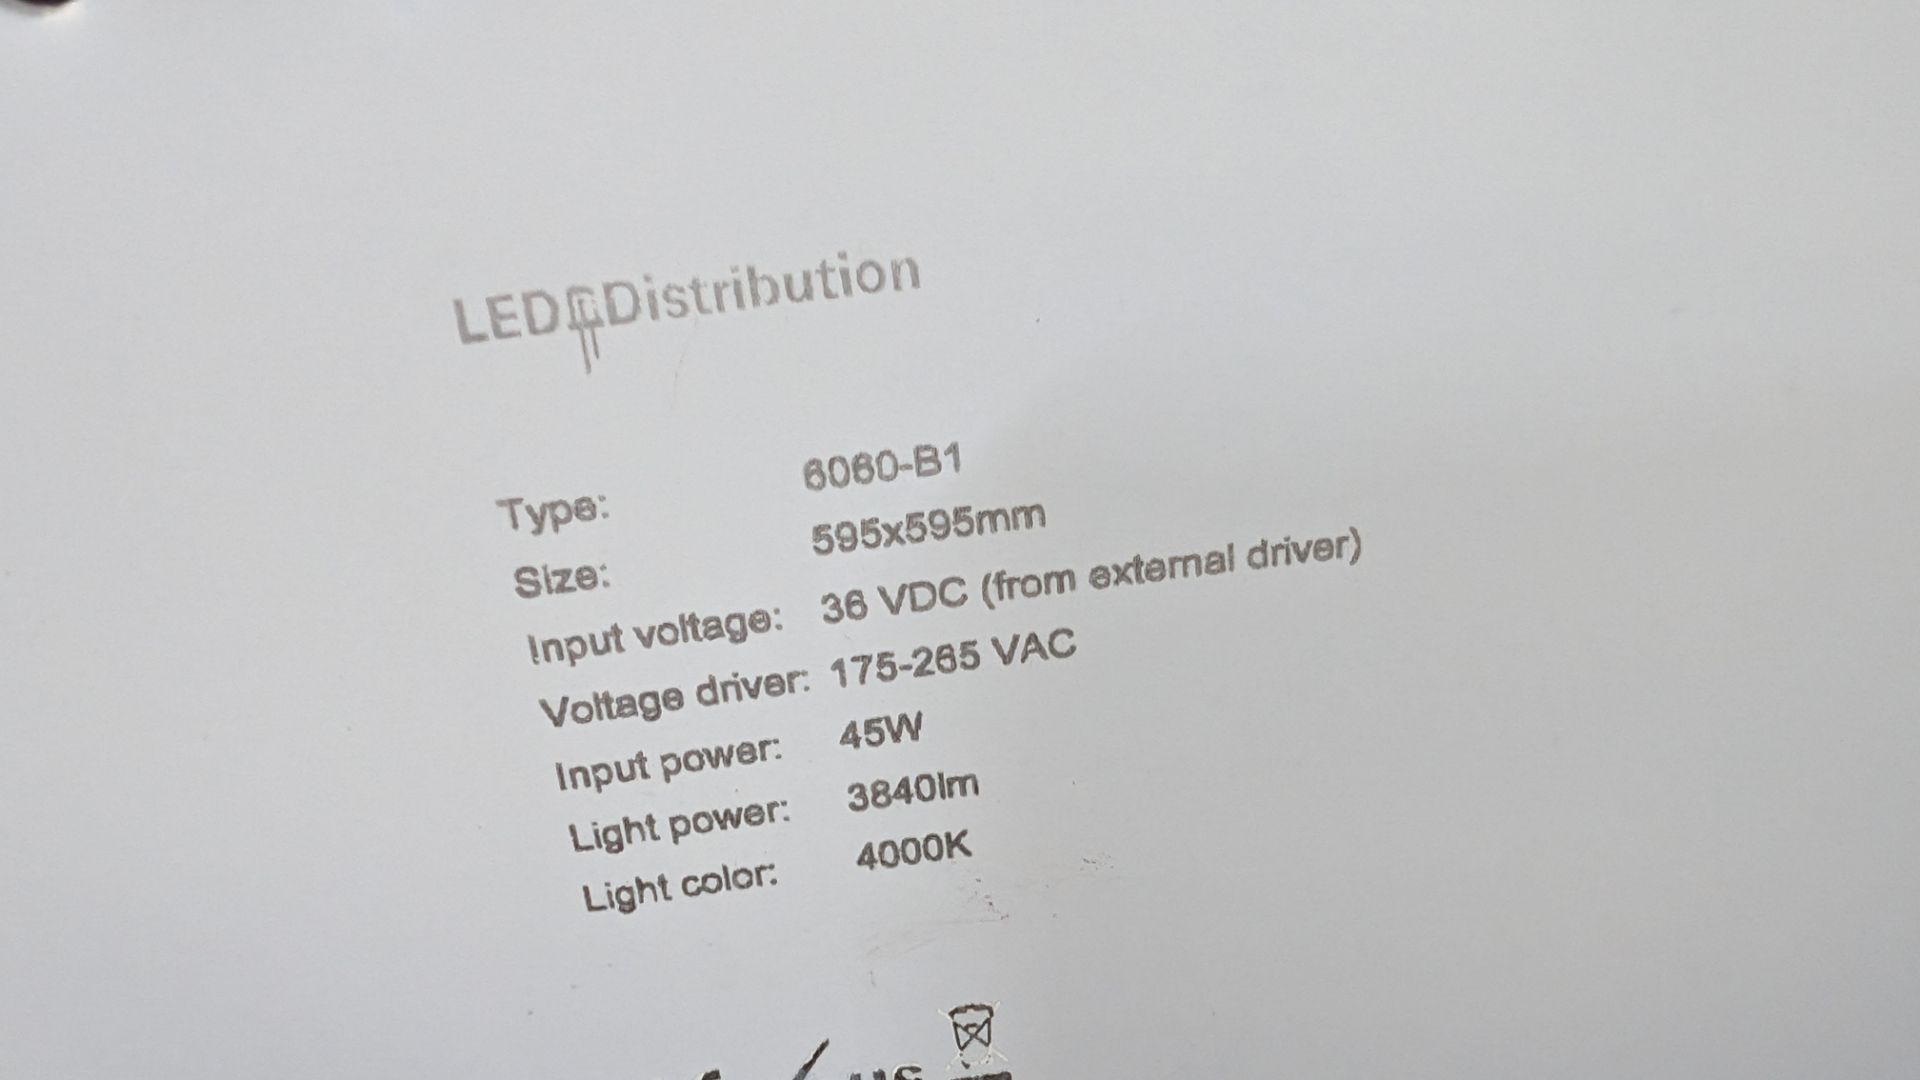 20 off Elegance (Standard) 595mm x 595mm LED lighting panels. 4000k. 45w input power. 45w drivers - Image 10 of 14